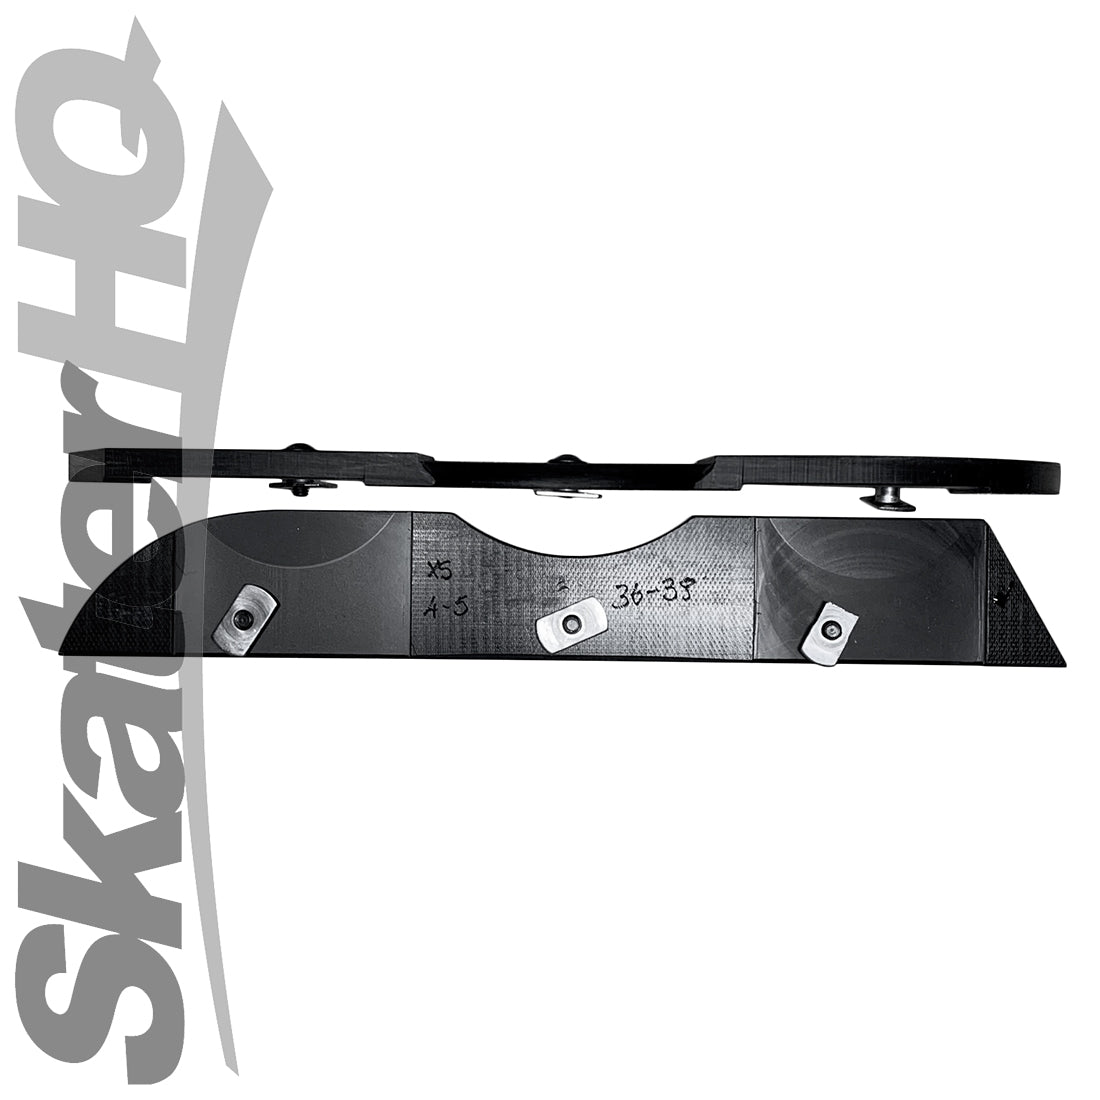 Sliqx Aeon Soul Plate Sliders - EU45-46 - Black Inline Hardware and Parts